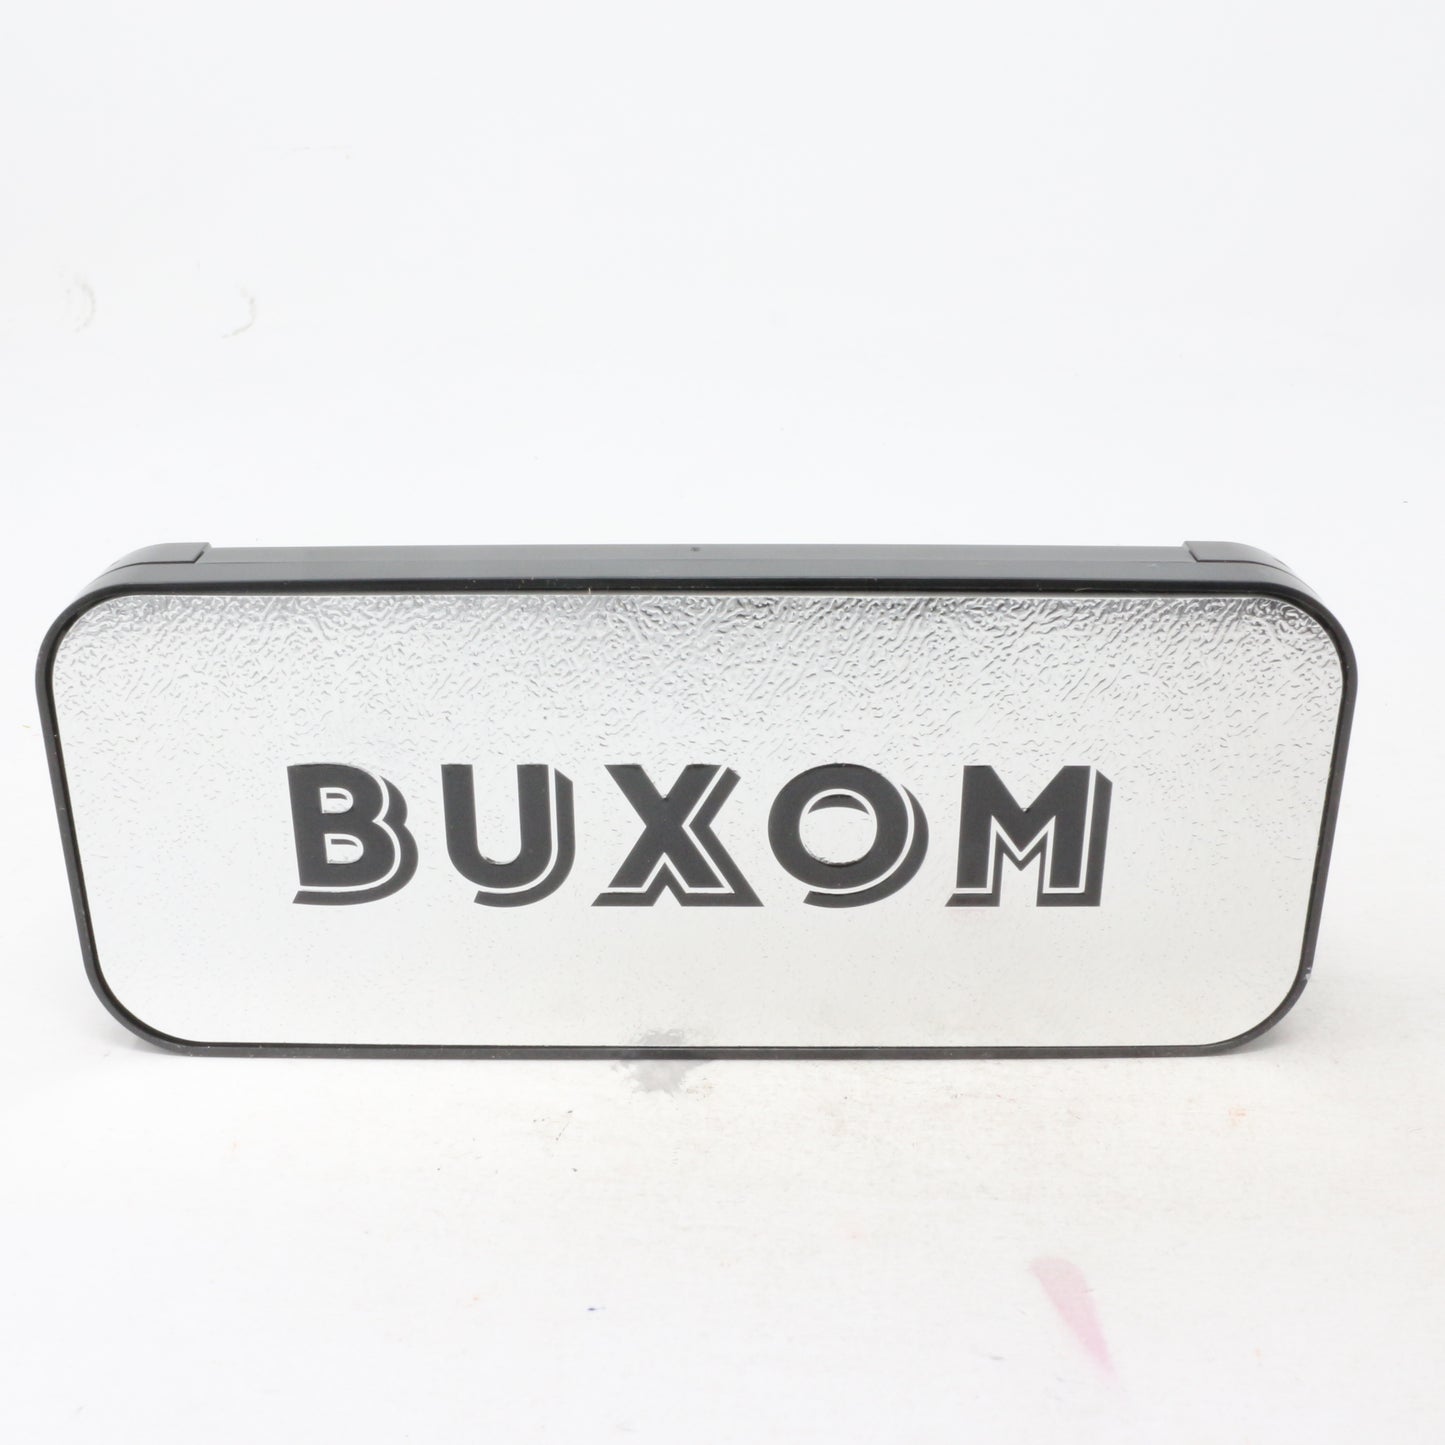 Buxom Empty Customizable Eyeshadow Palette  / New With Box